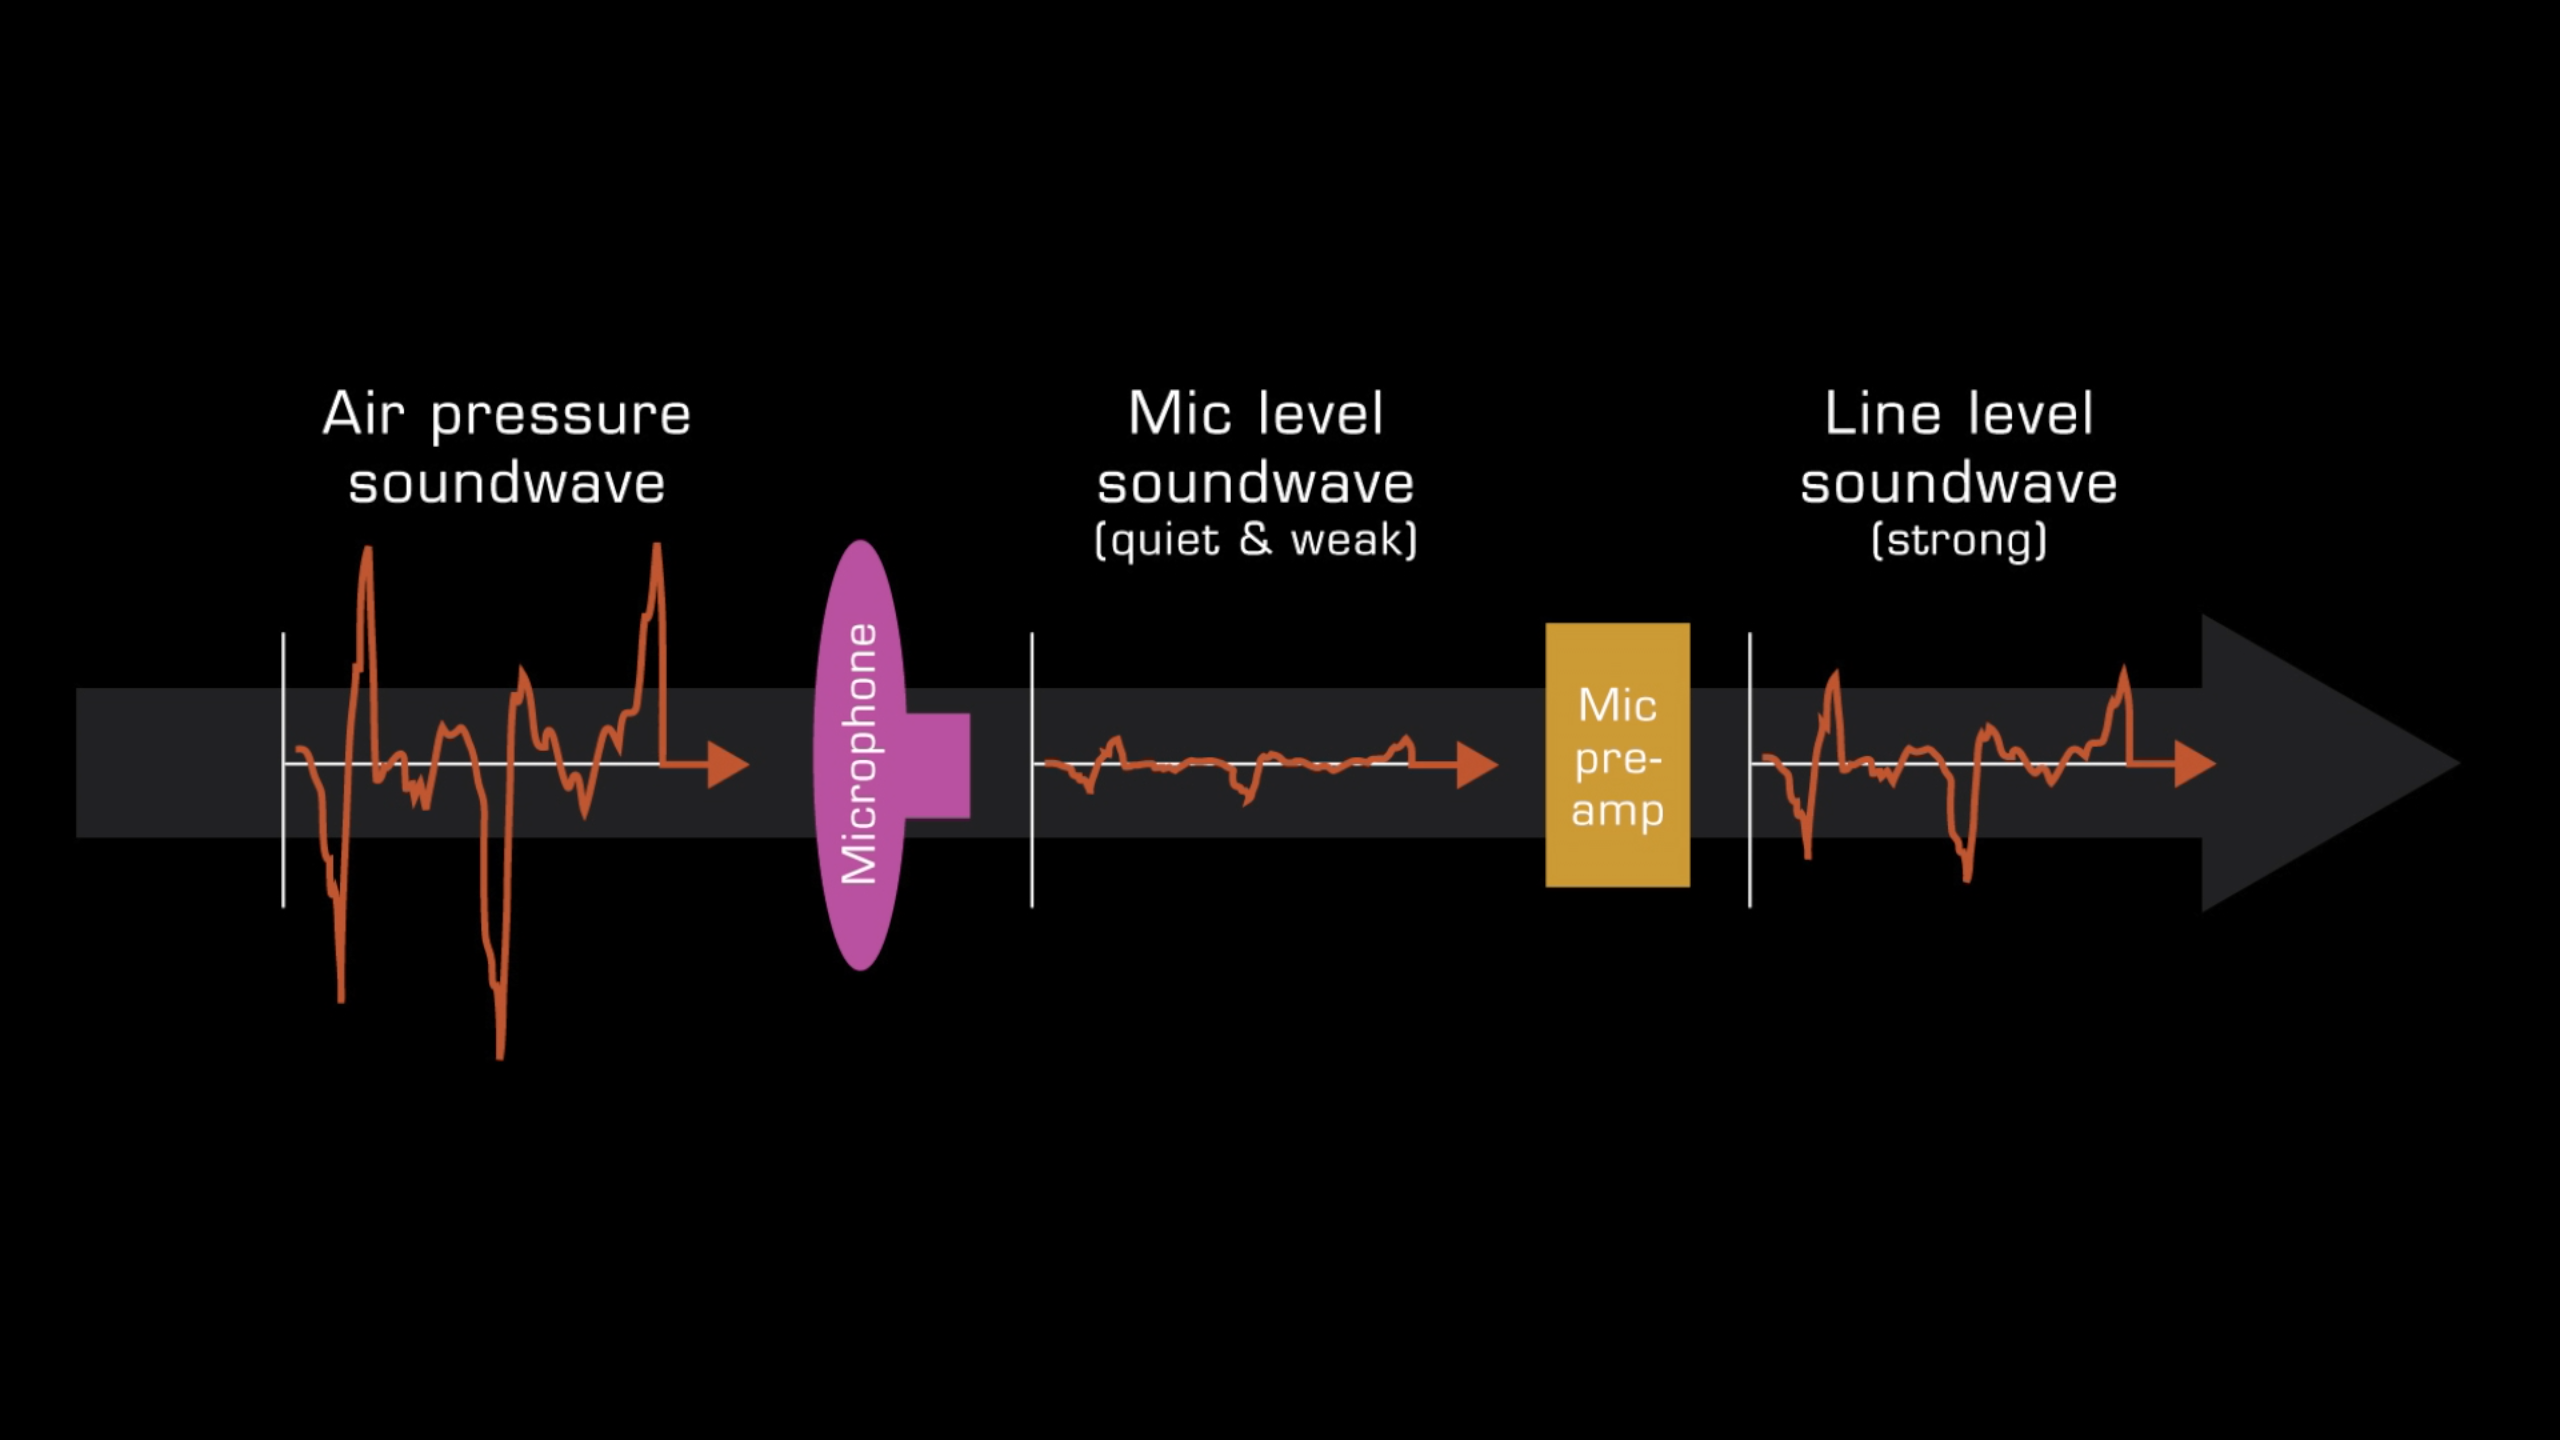 Mic to mic pre-amp signal flow diagram